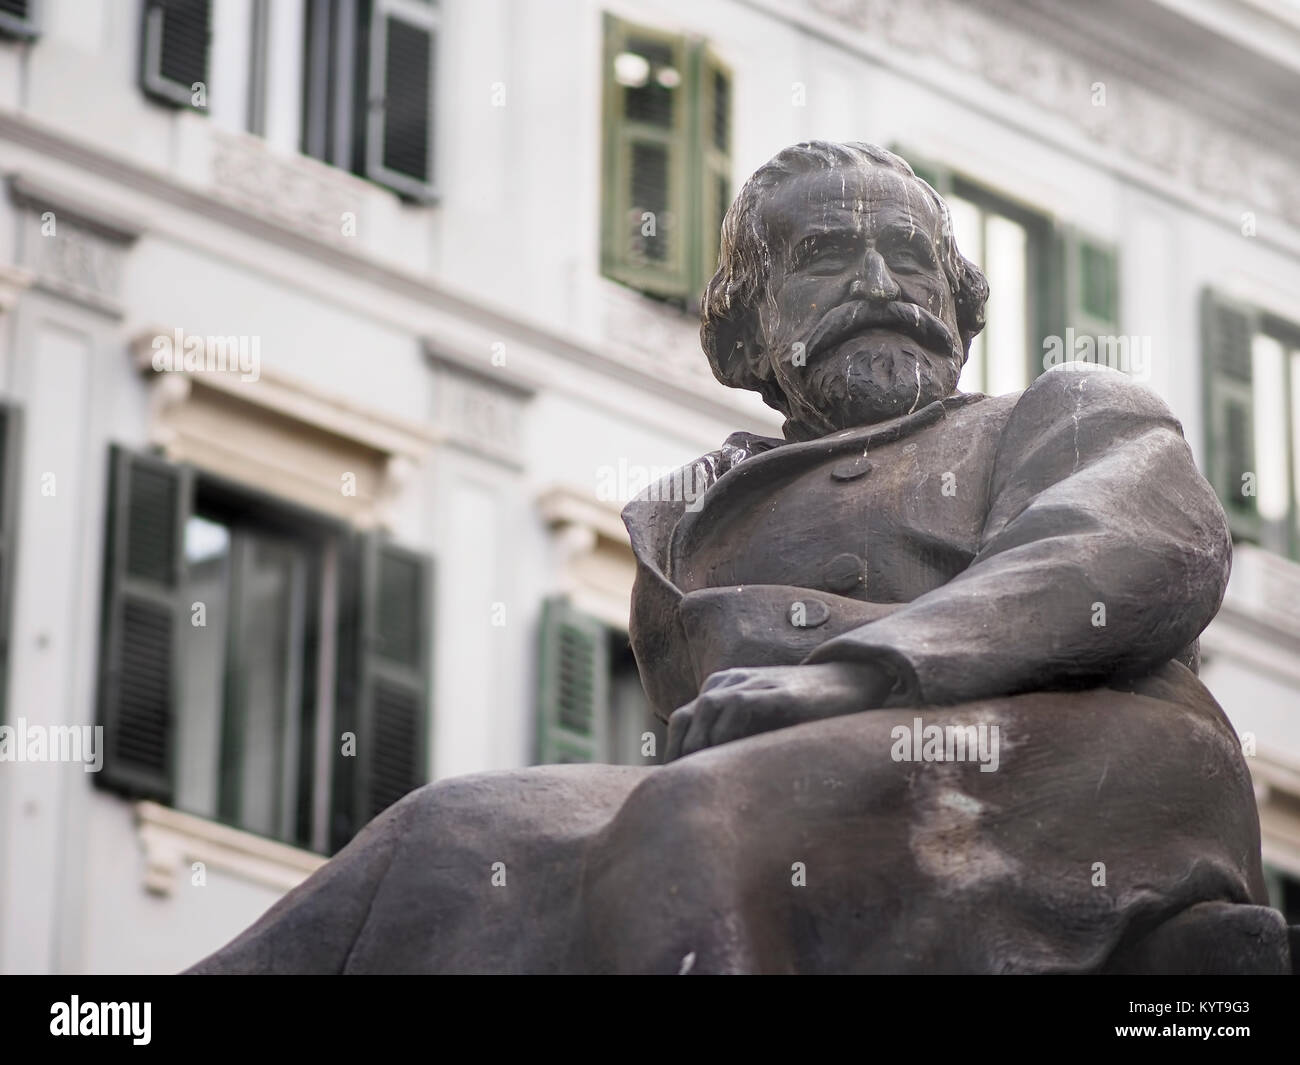 Monument of Giuseppe Verdi, the famous Italian composer, in a public street. Stock Photo